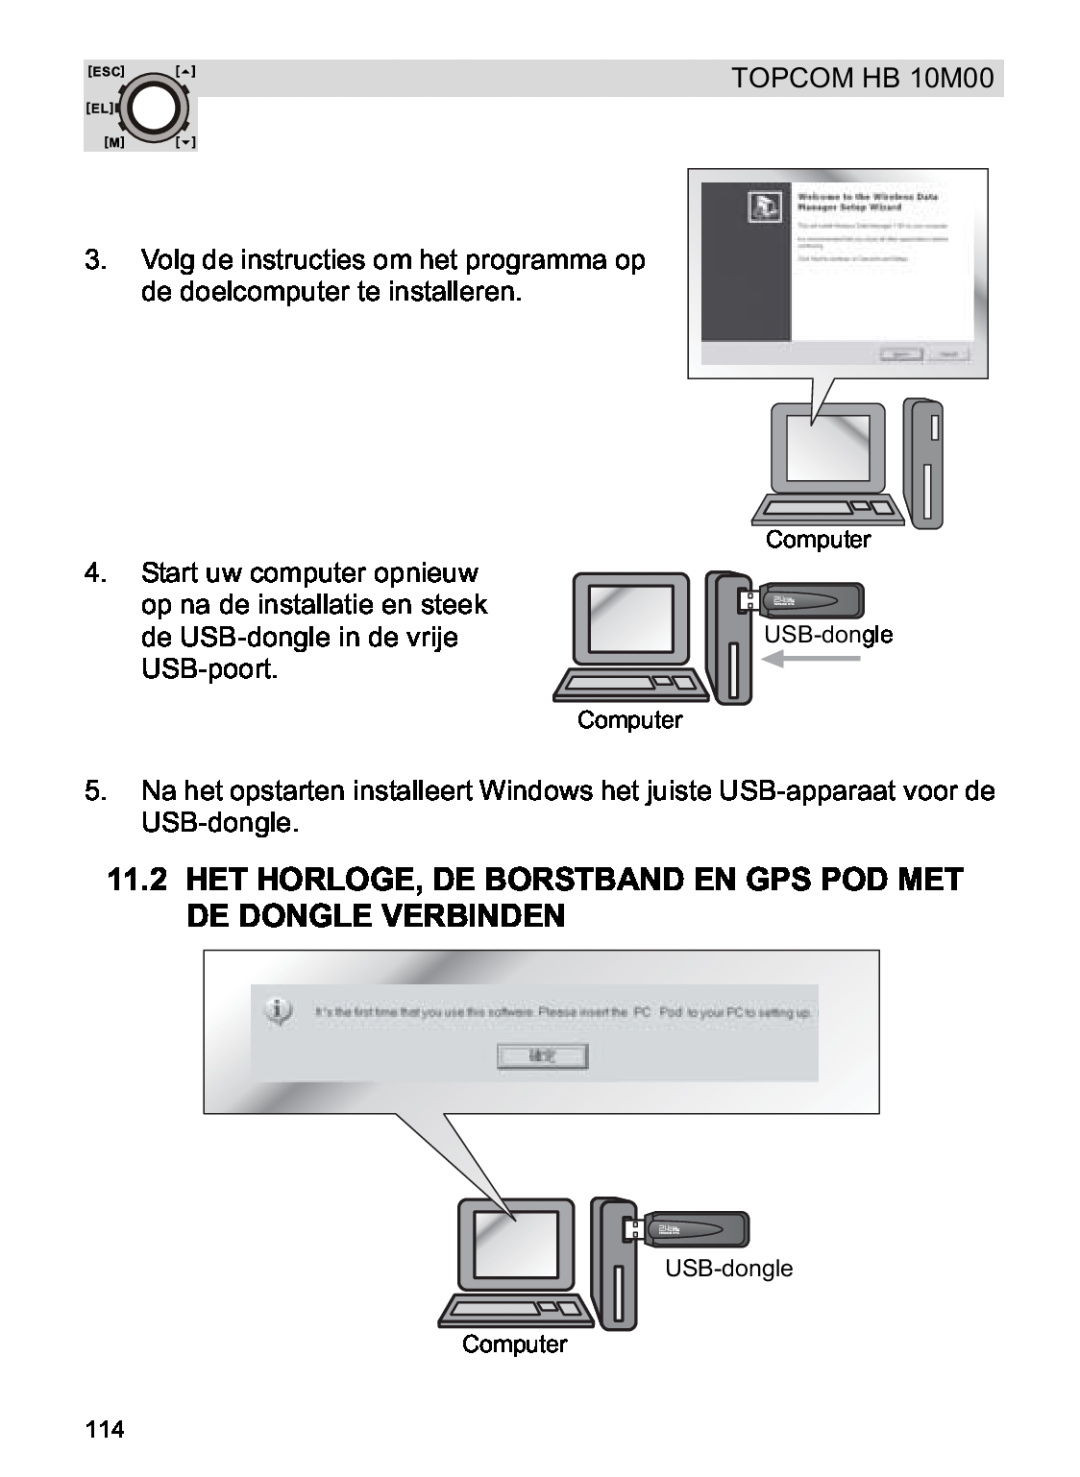 Topcom manual Het Horloge, De Borstband En Gps Pod Met De Dongle Verbinden, TOPCOM HB 10M00 